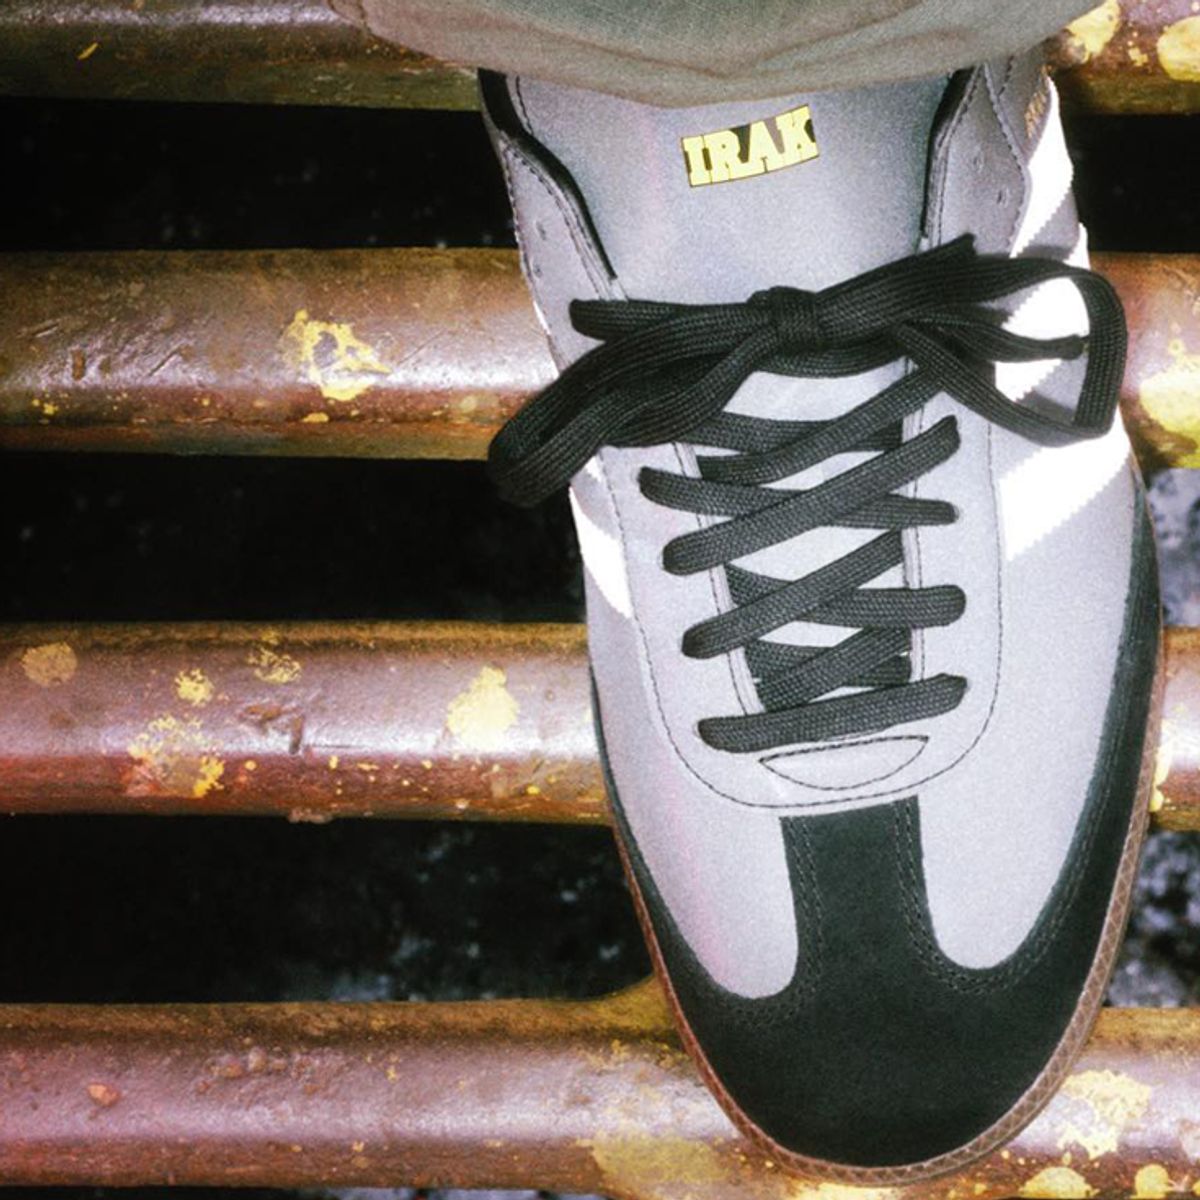 Wrijven Verenigde Staten van Amerika Pikken Legendary Graffiti Crew IRAK Drop Reflective adidas Sambas - Sneaker Freaker